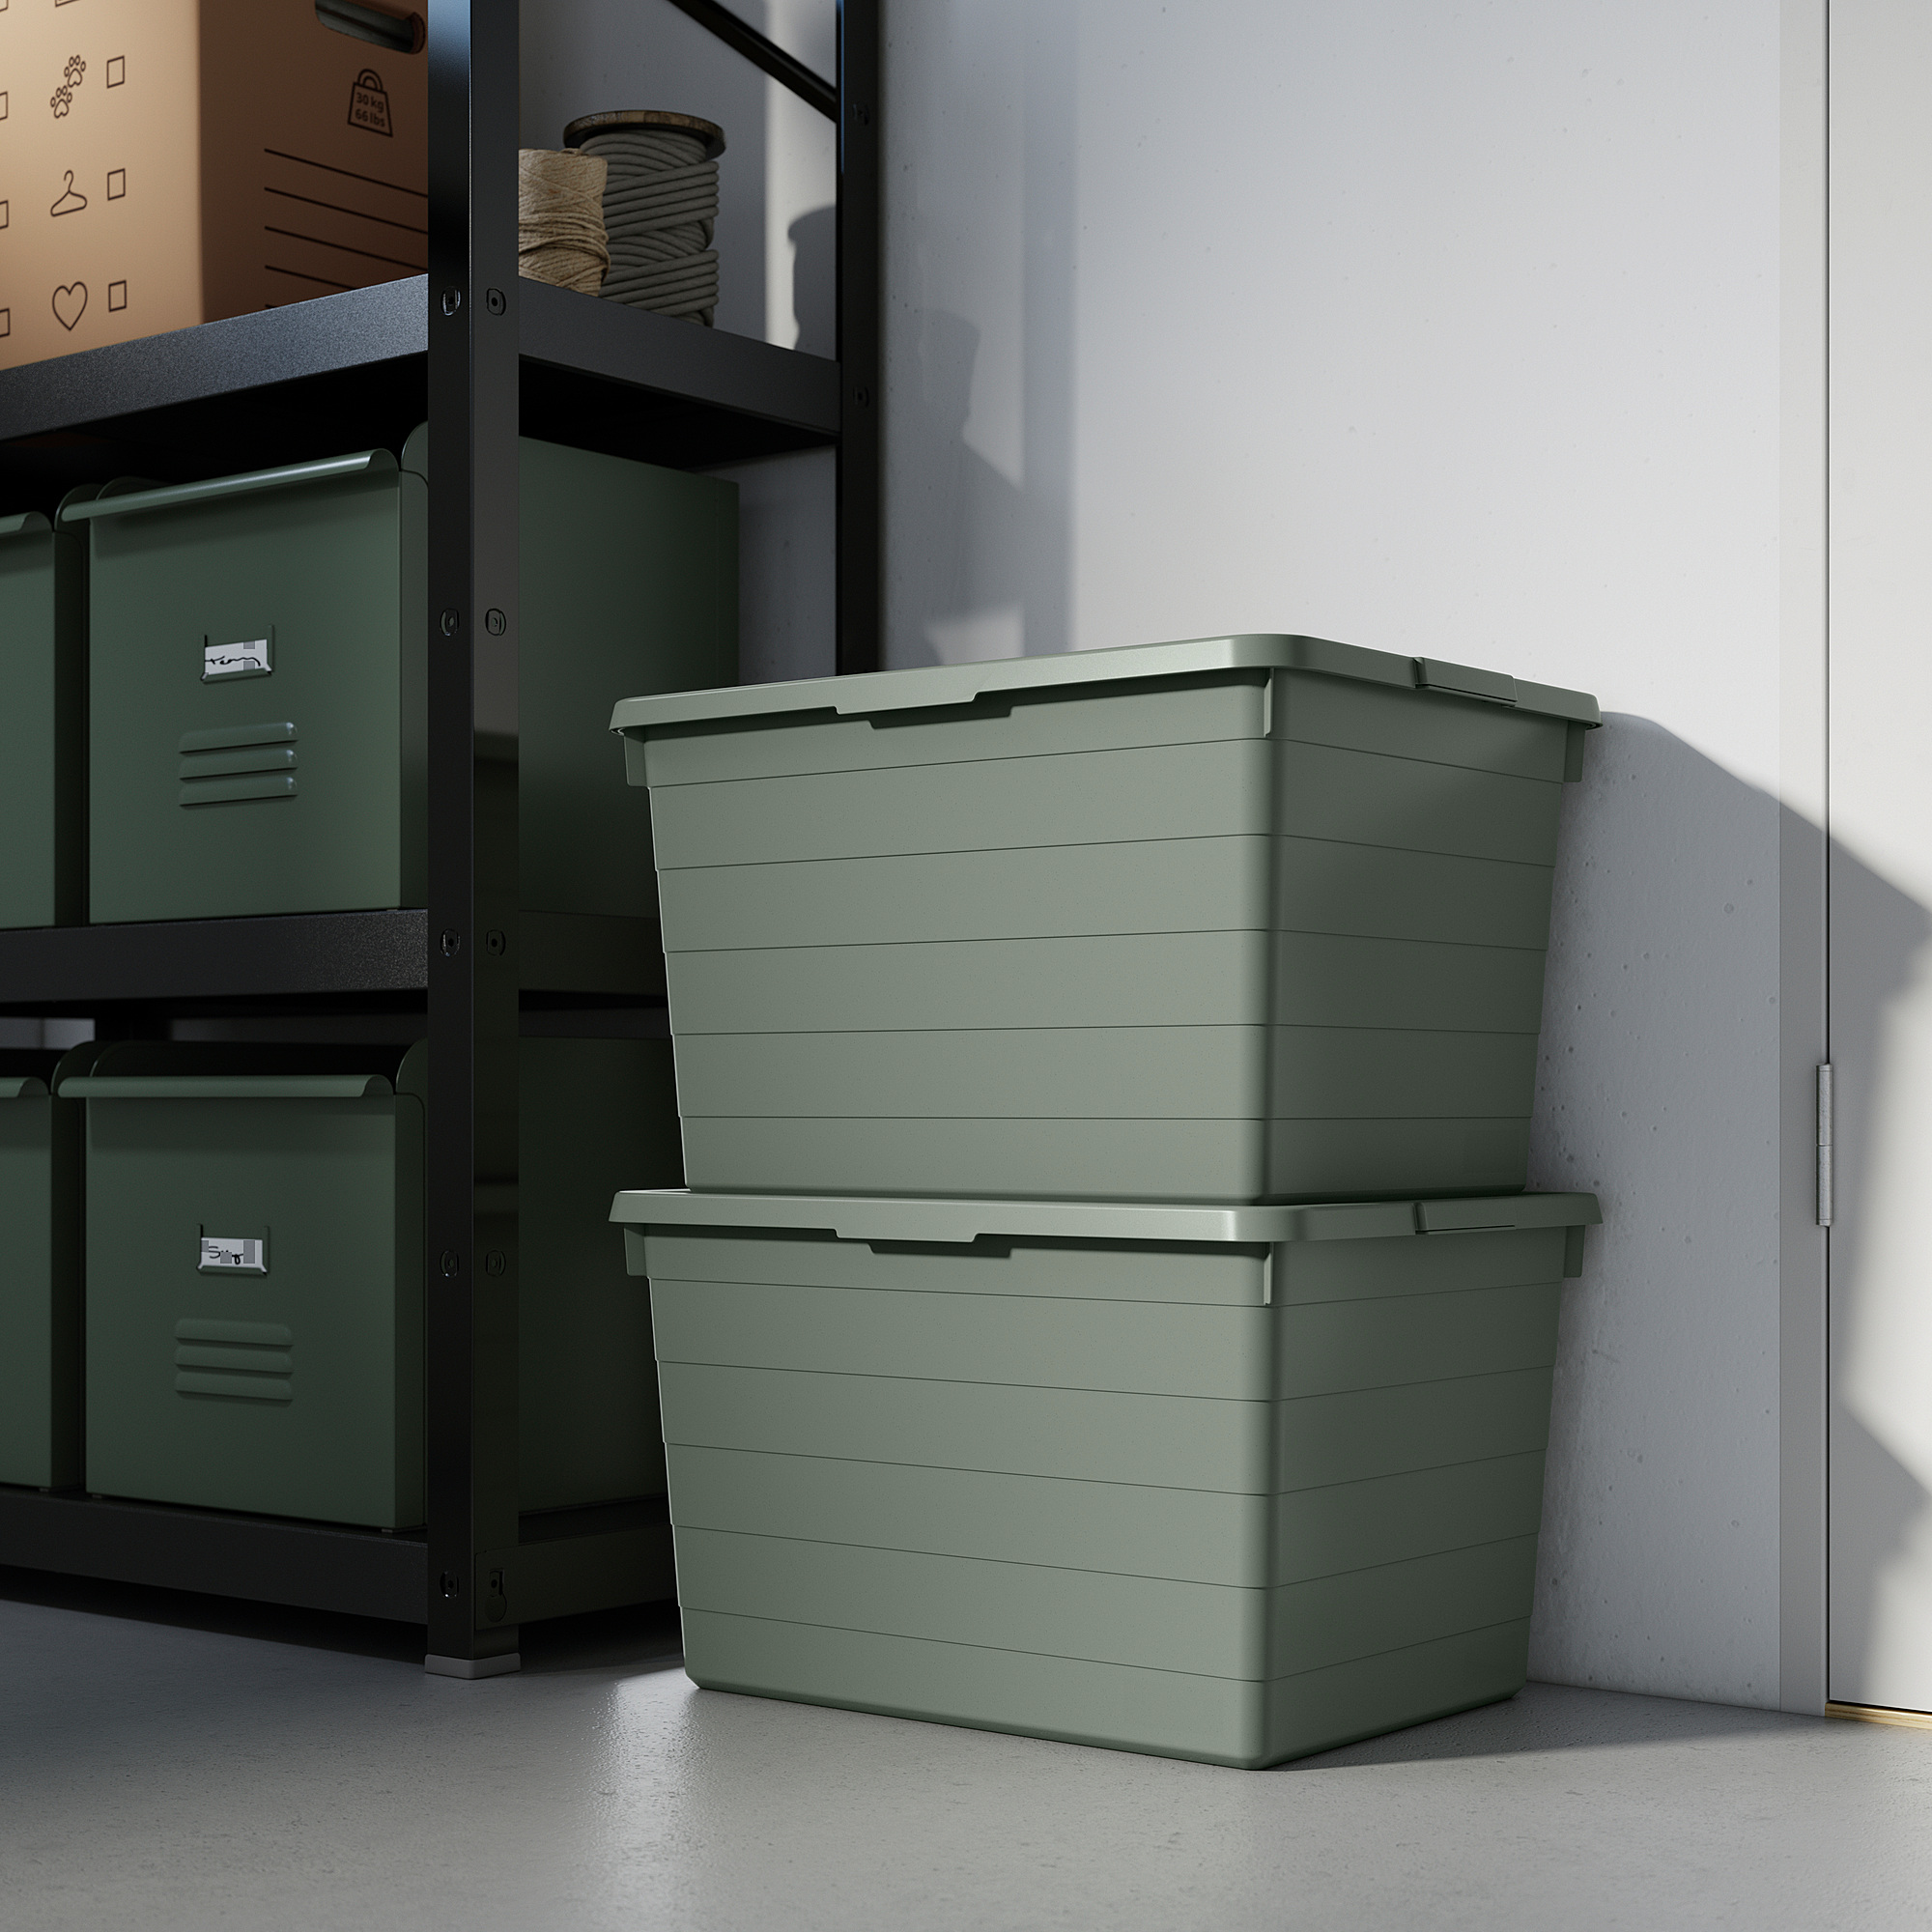 SOCKERBIT storage box with lid